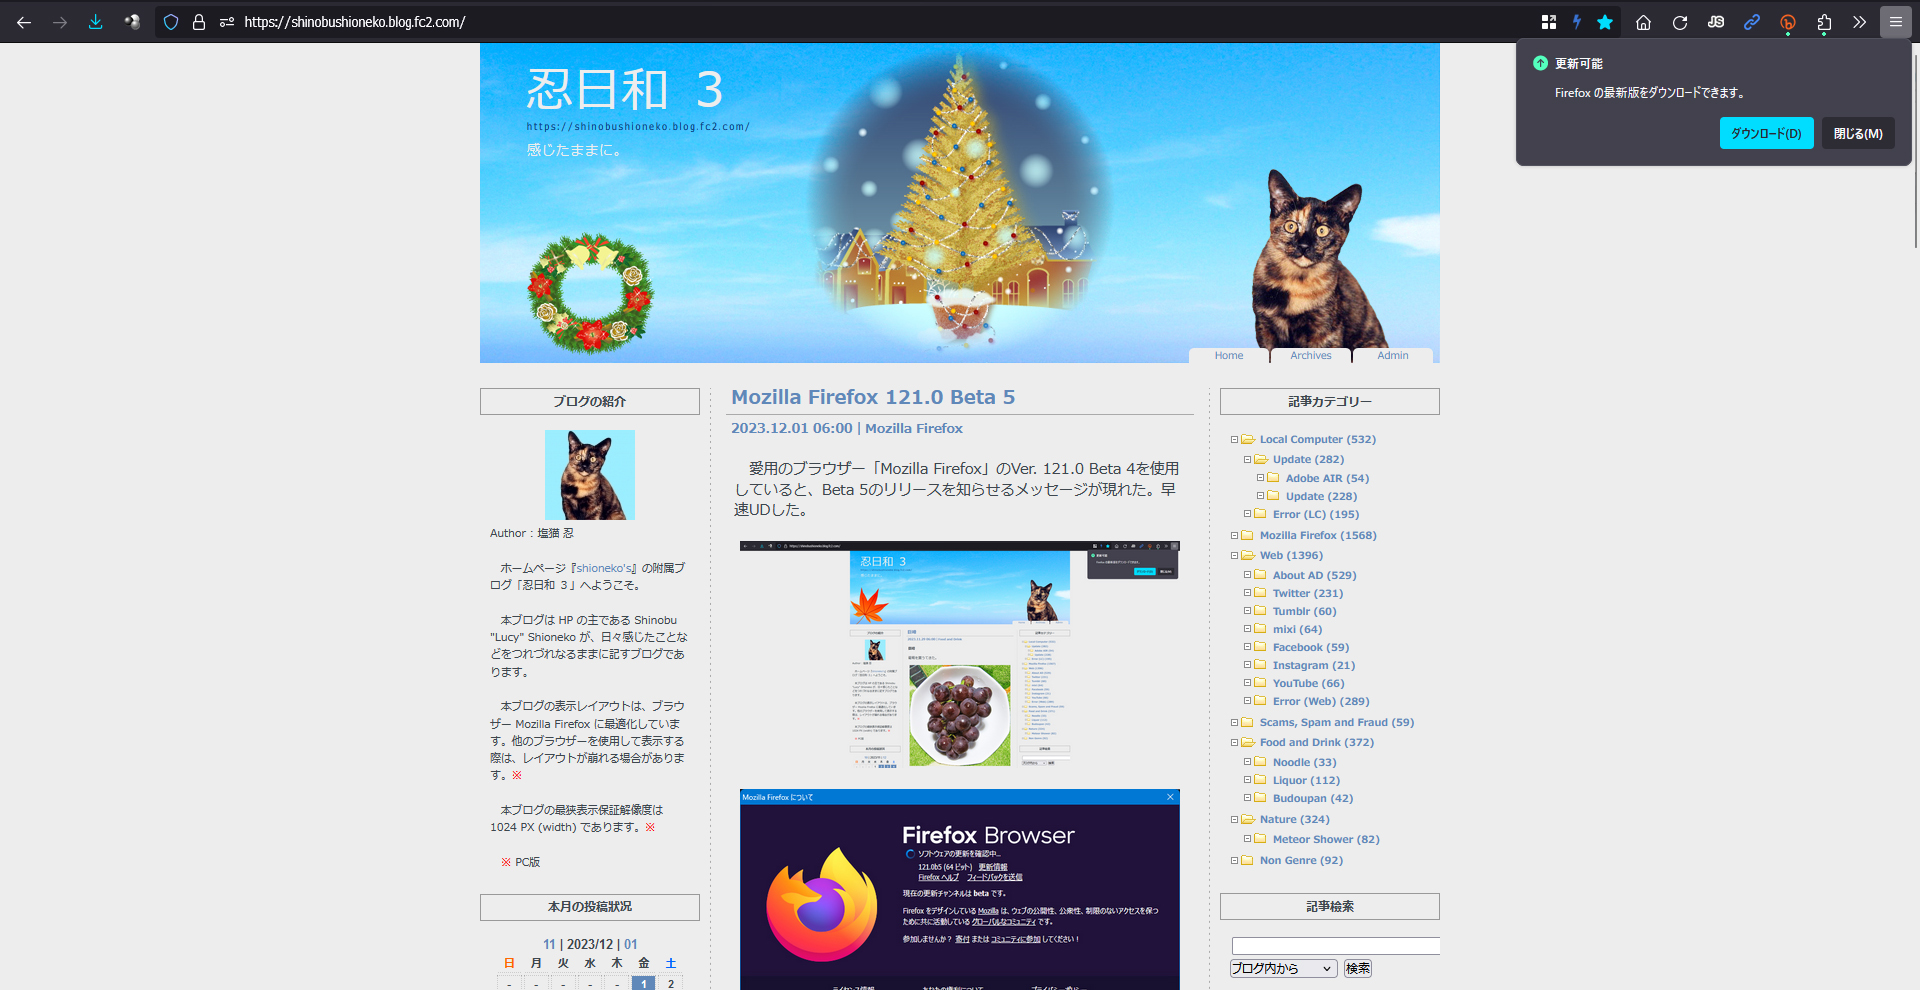 Mozilla Firefox 121.0 Beta 6